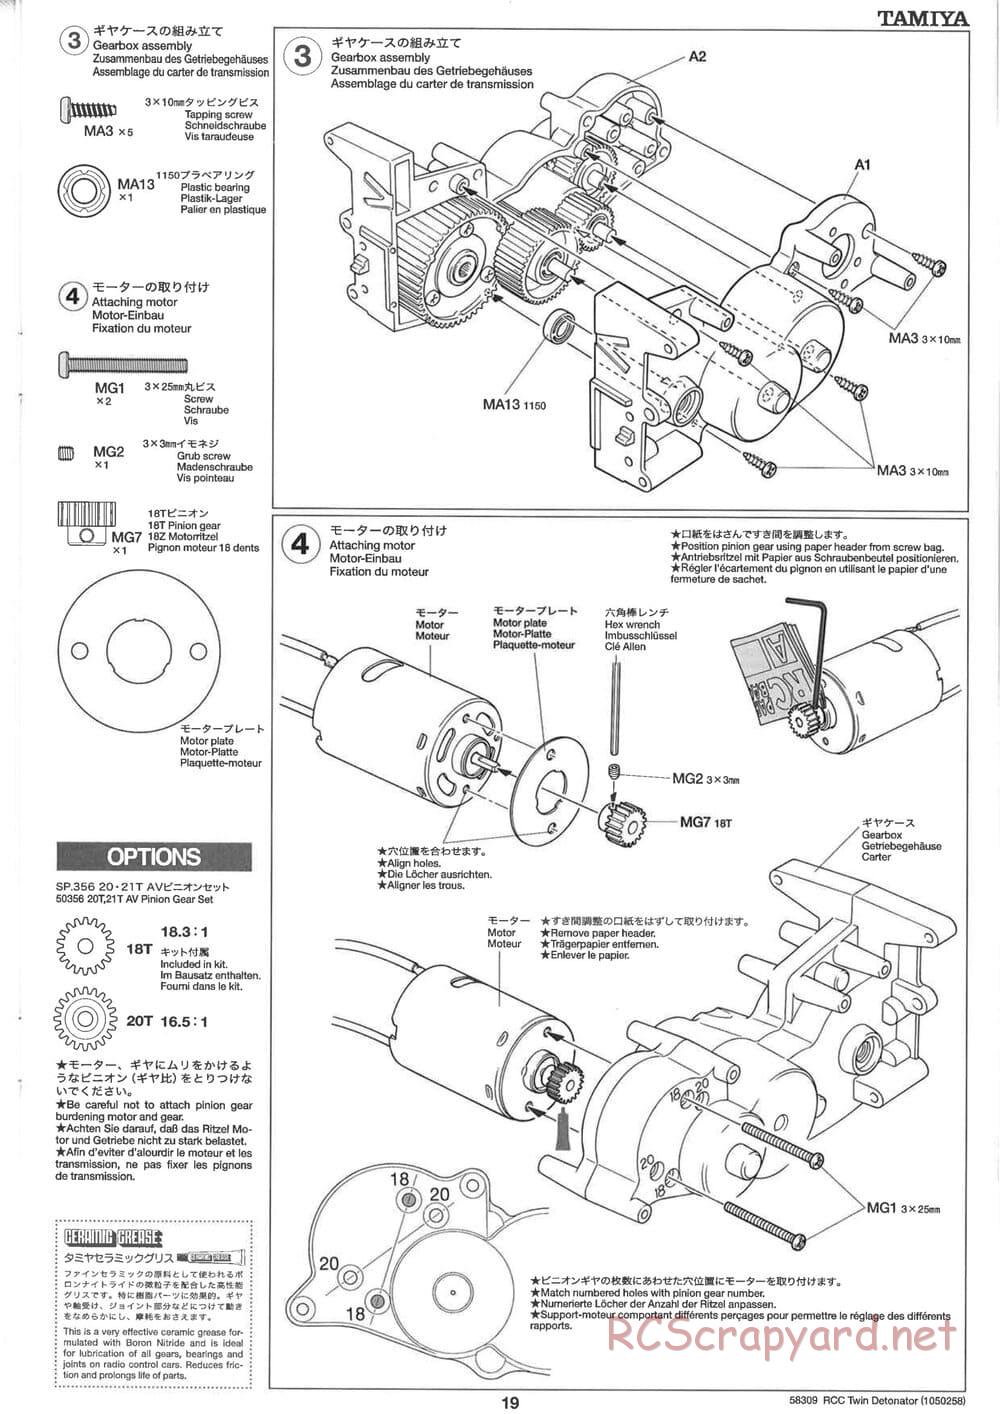 Tamiya - Twin Detonator - WR-01 Chassis - Manual - Page 19